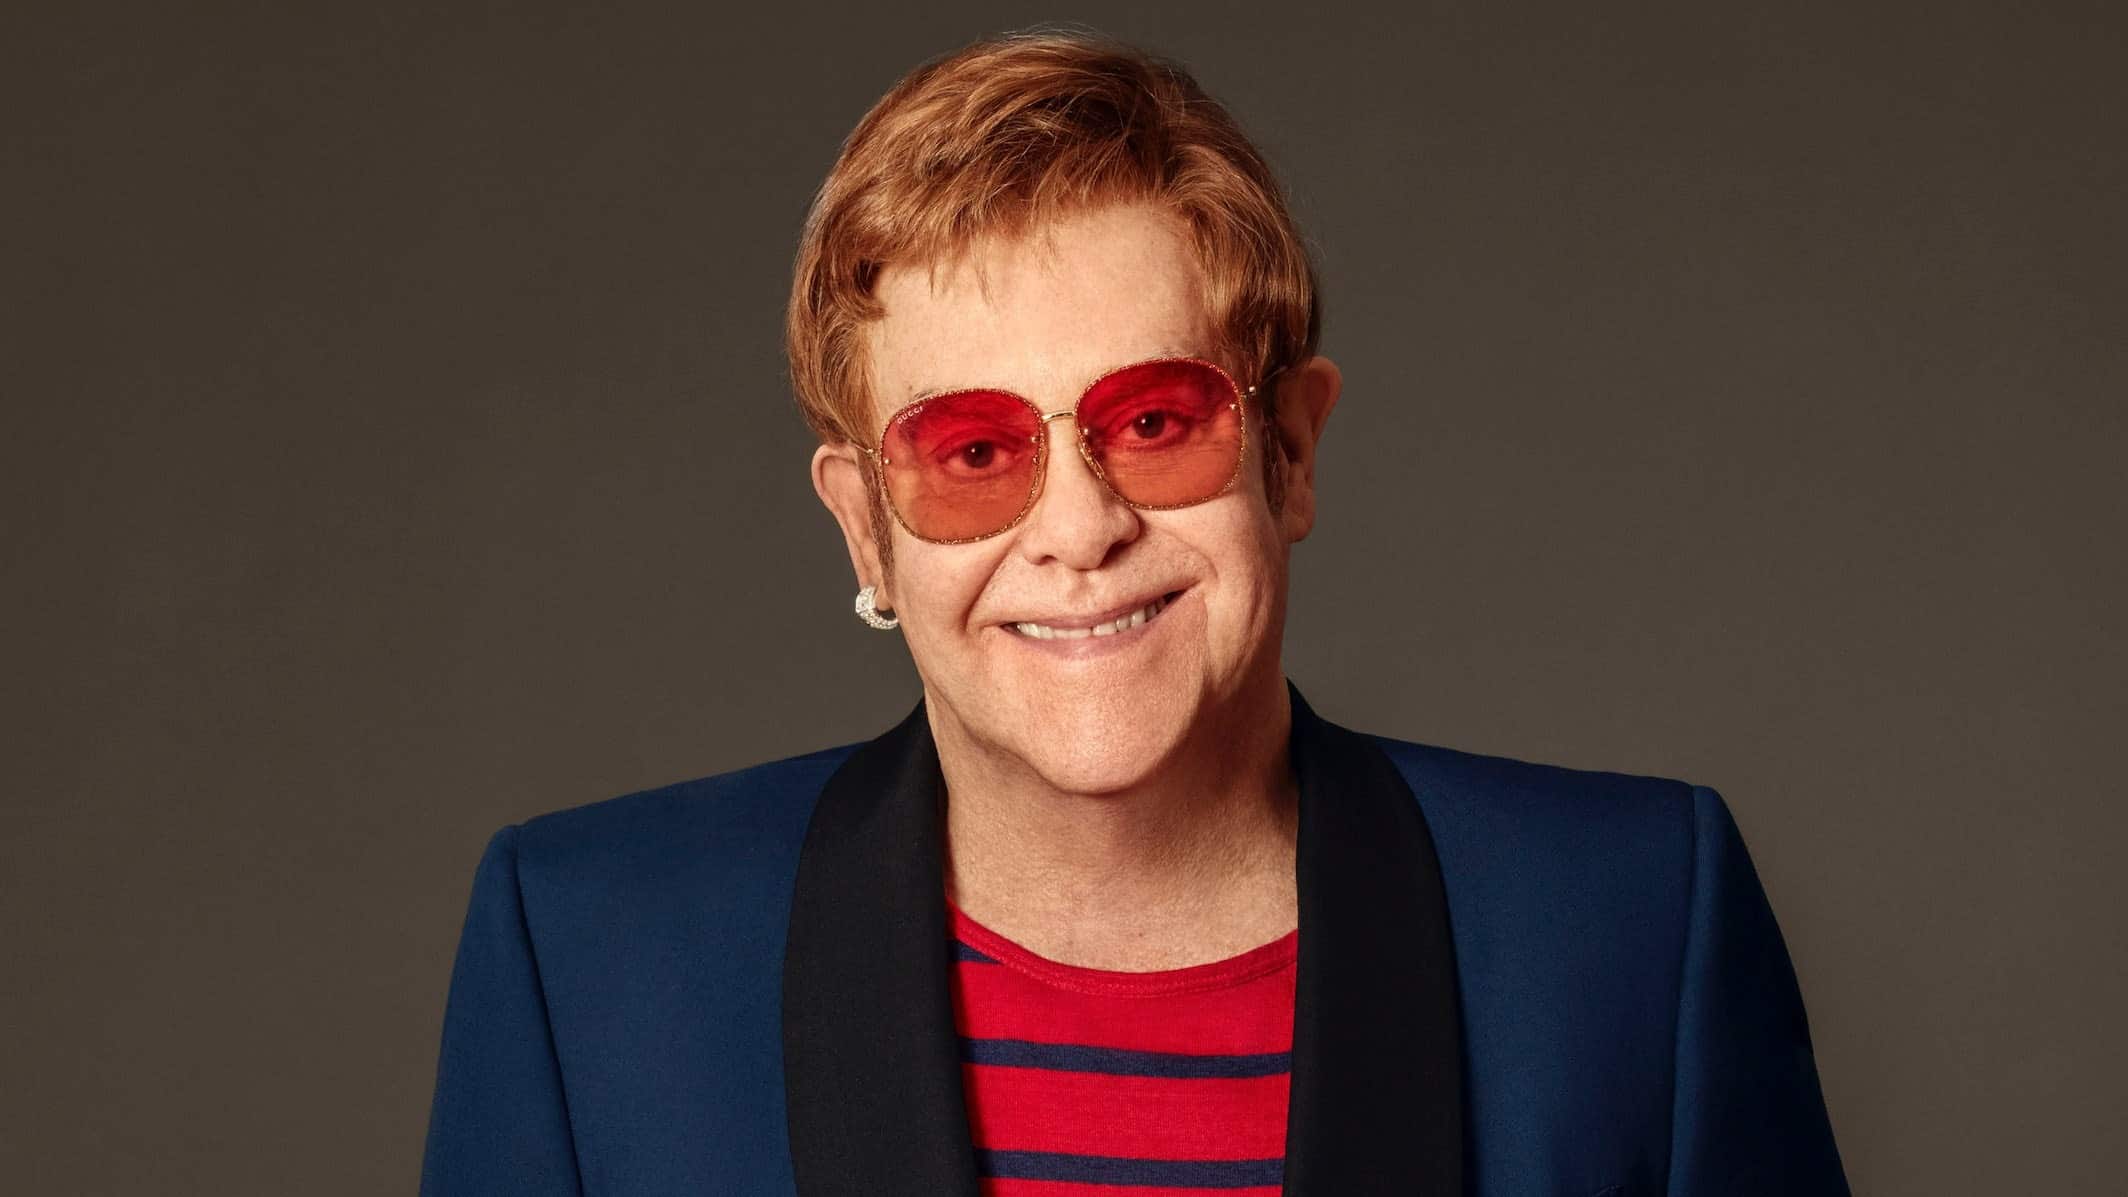 Lyrics for Levon by Elton John - Songfacts